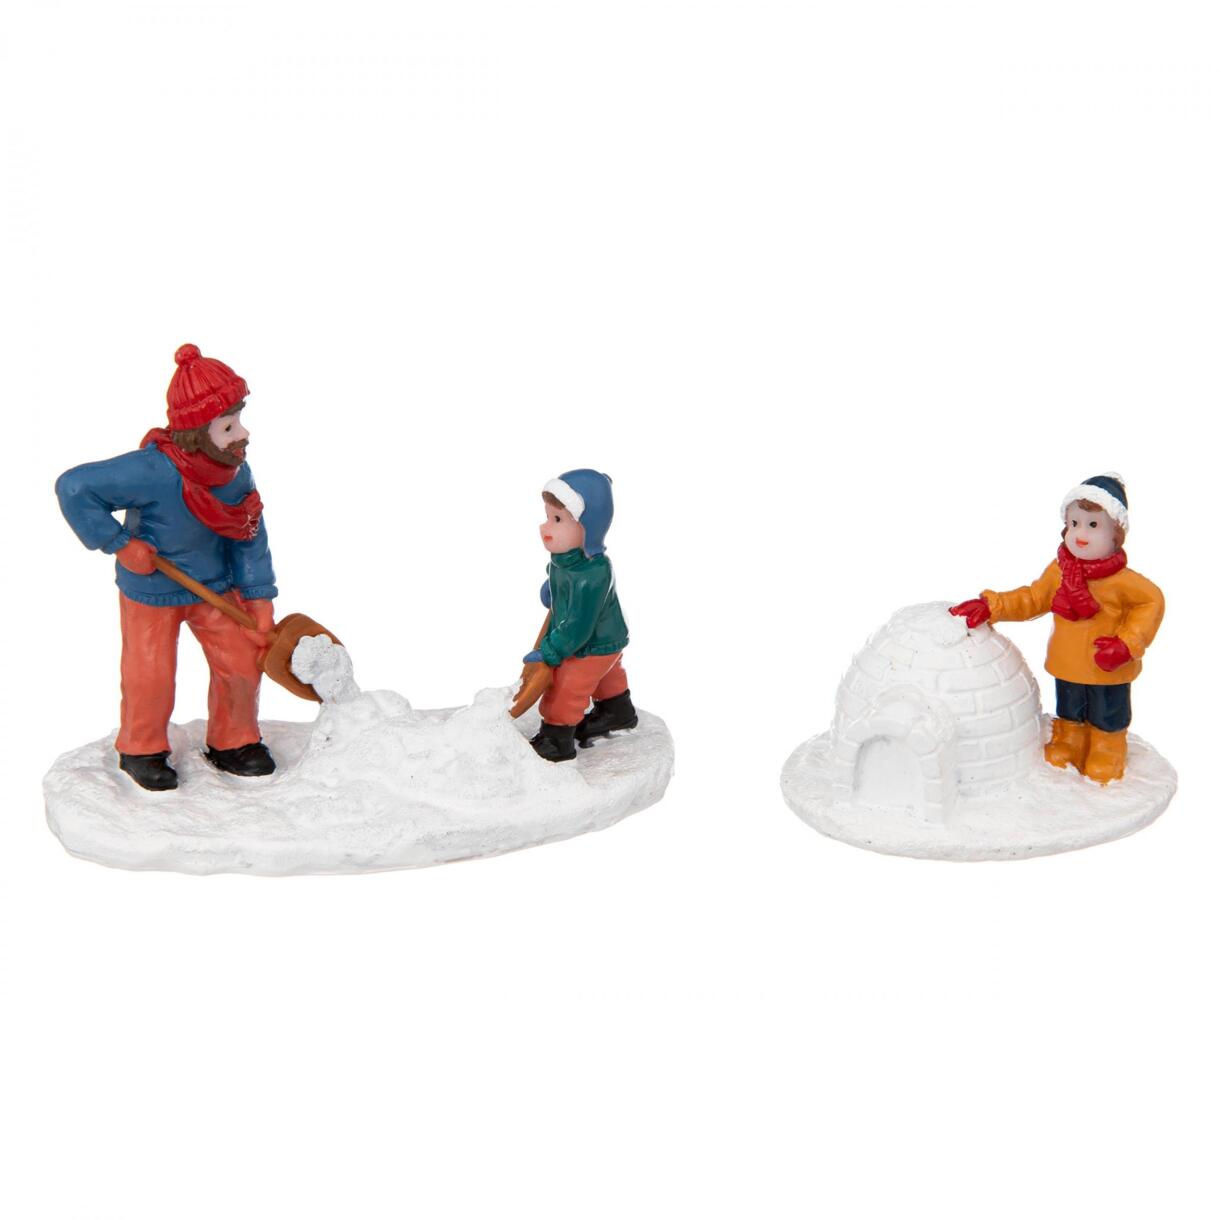 Figurines Jeu de neige pour village